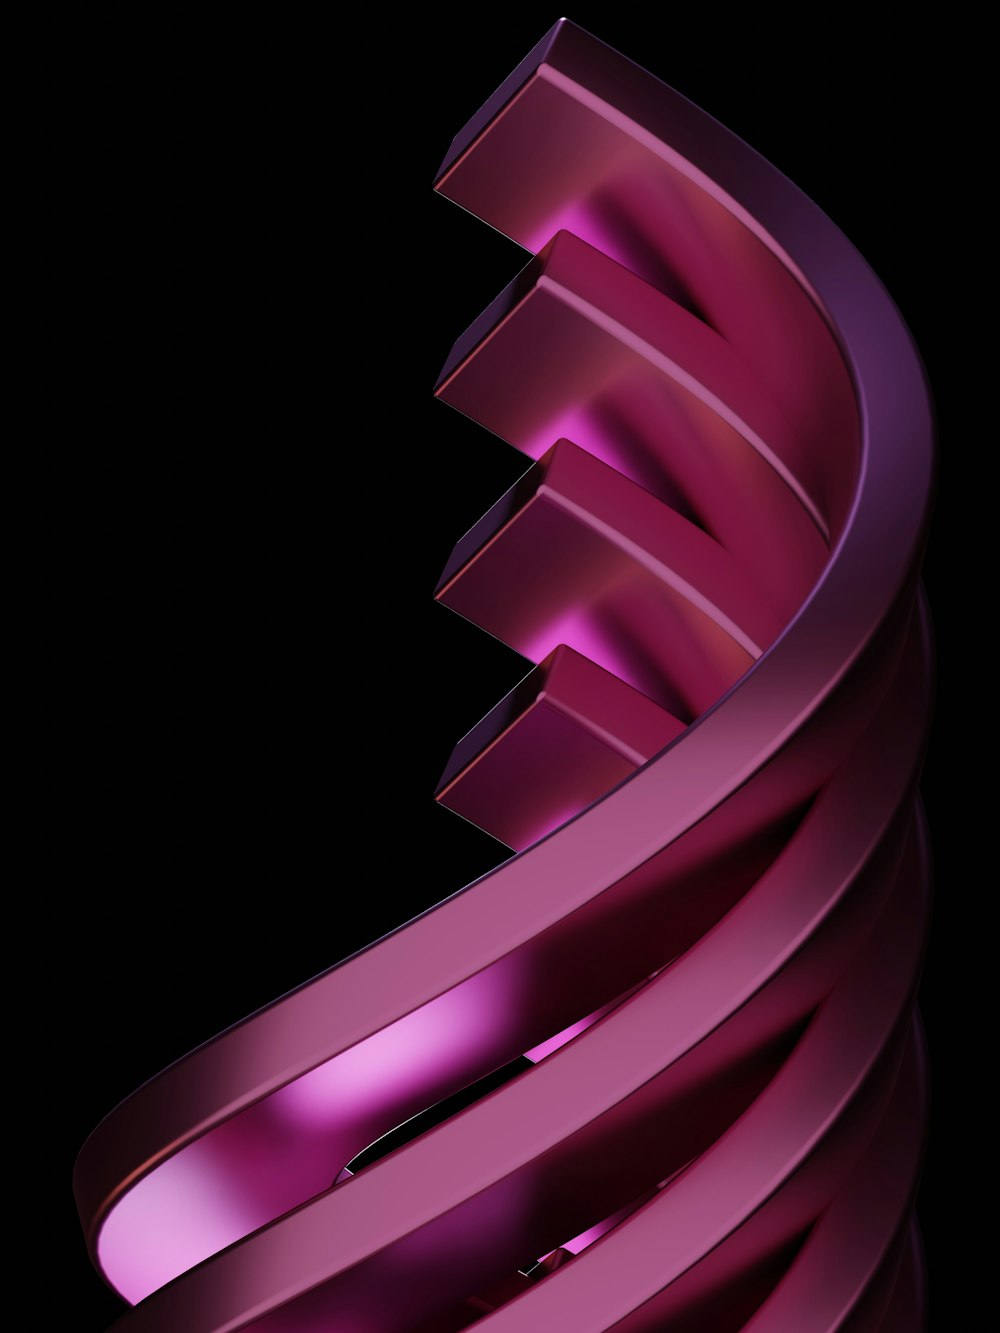 a purple spiral on a black background